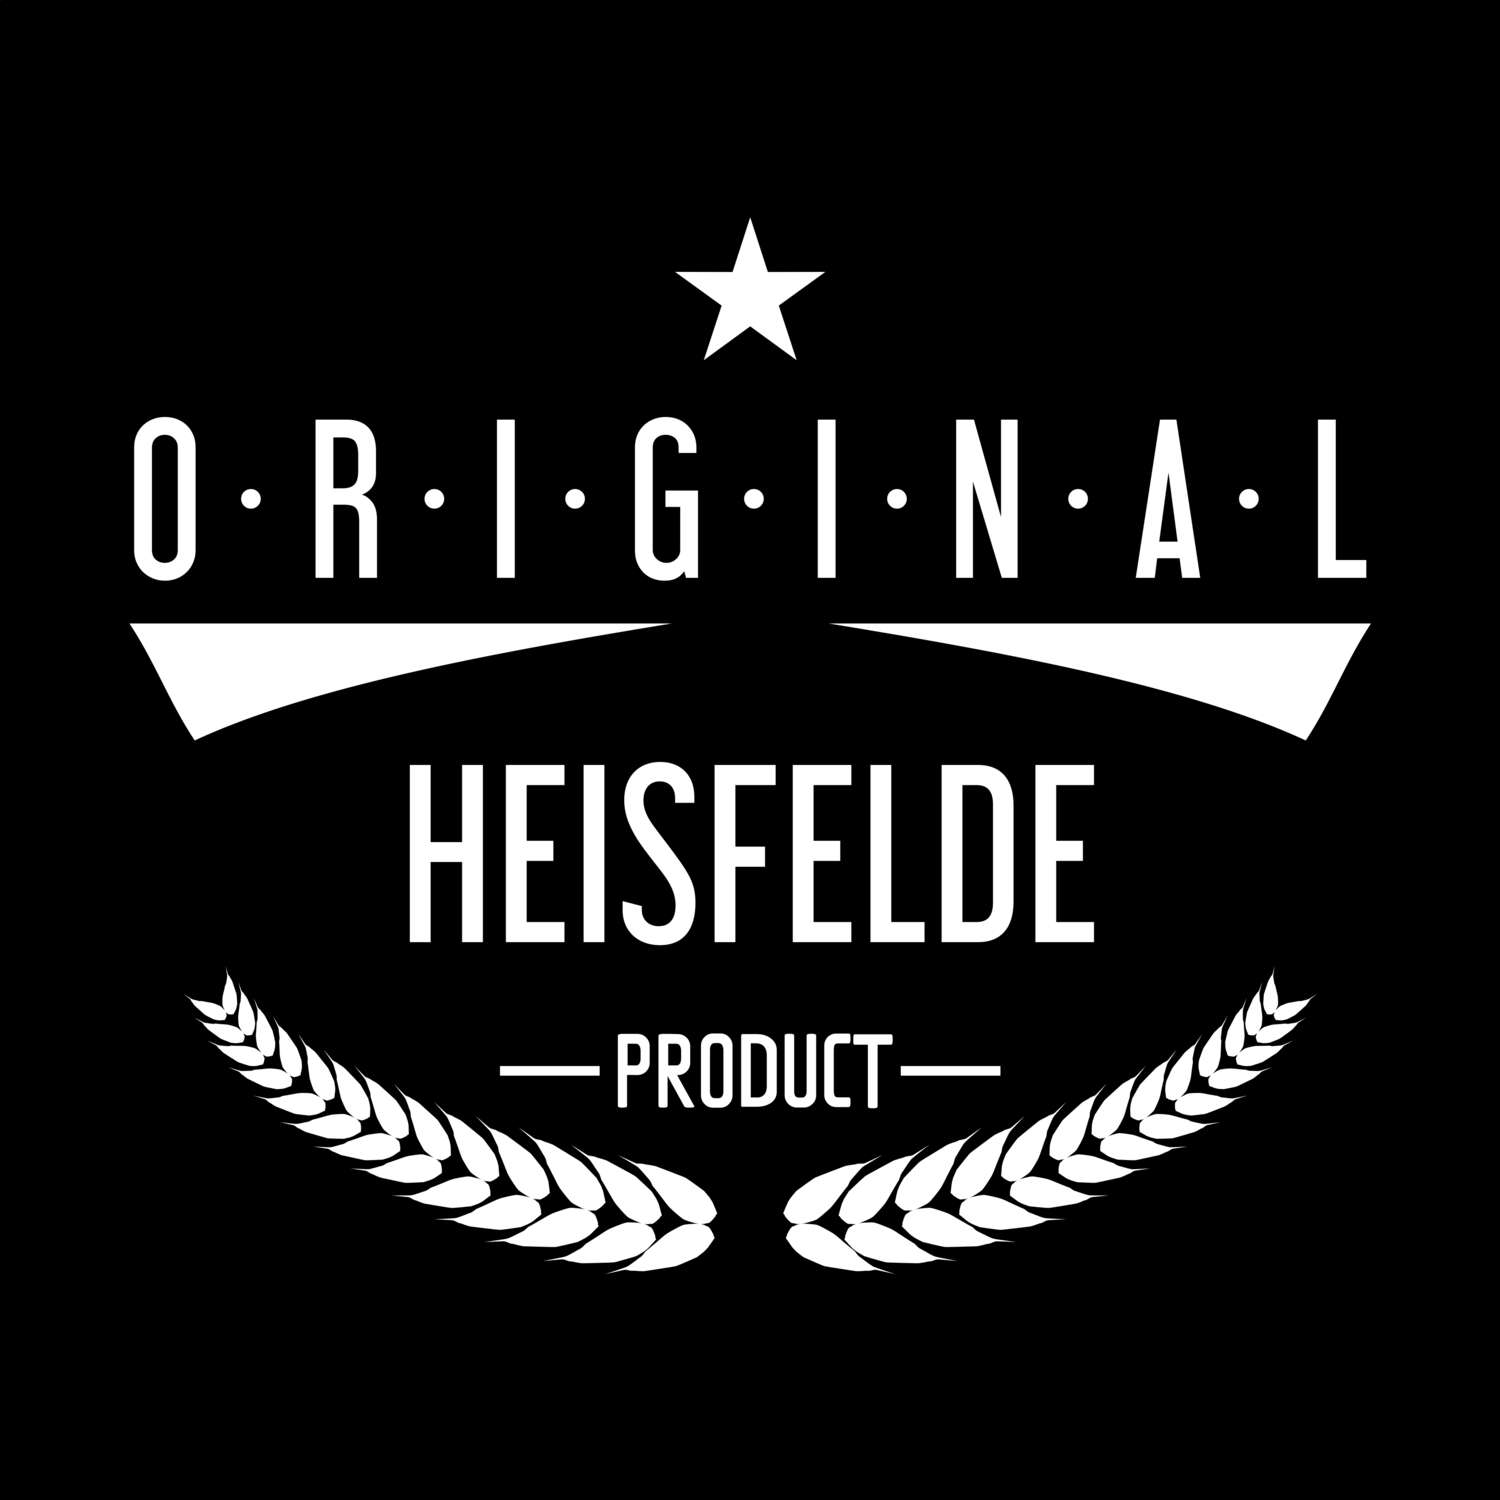 Heisfelde T-Shirt »Original Product«